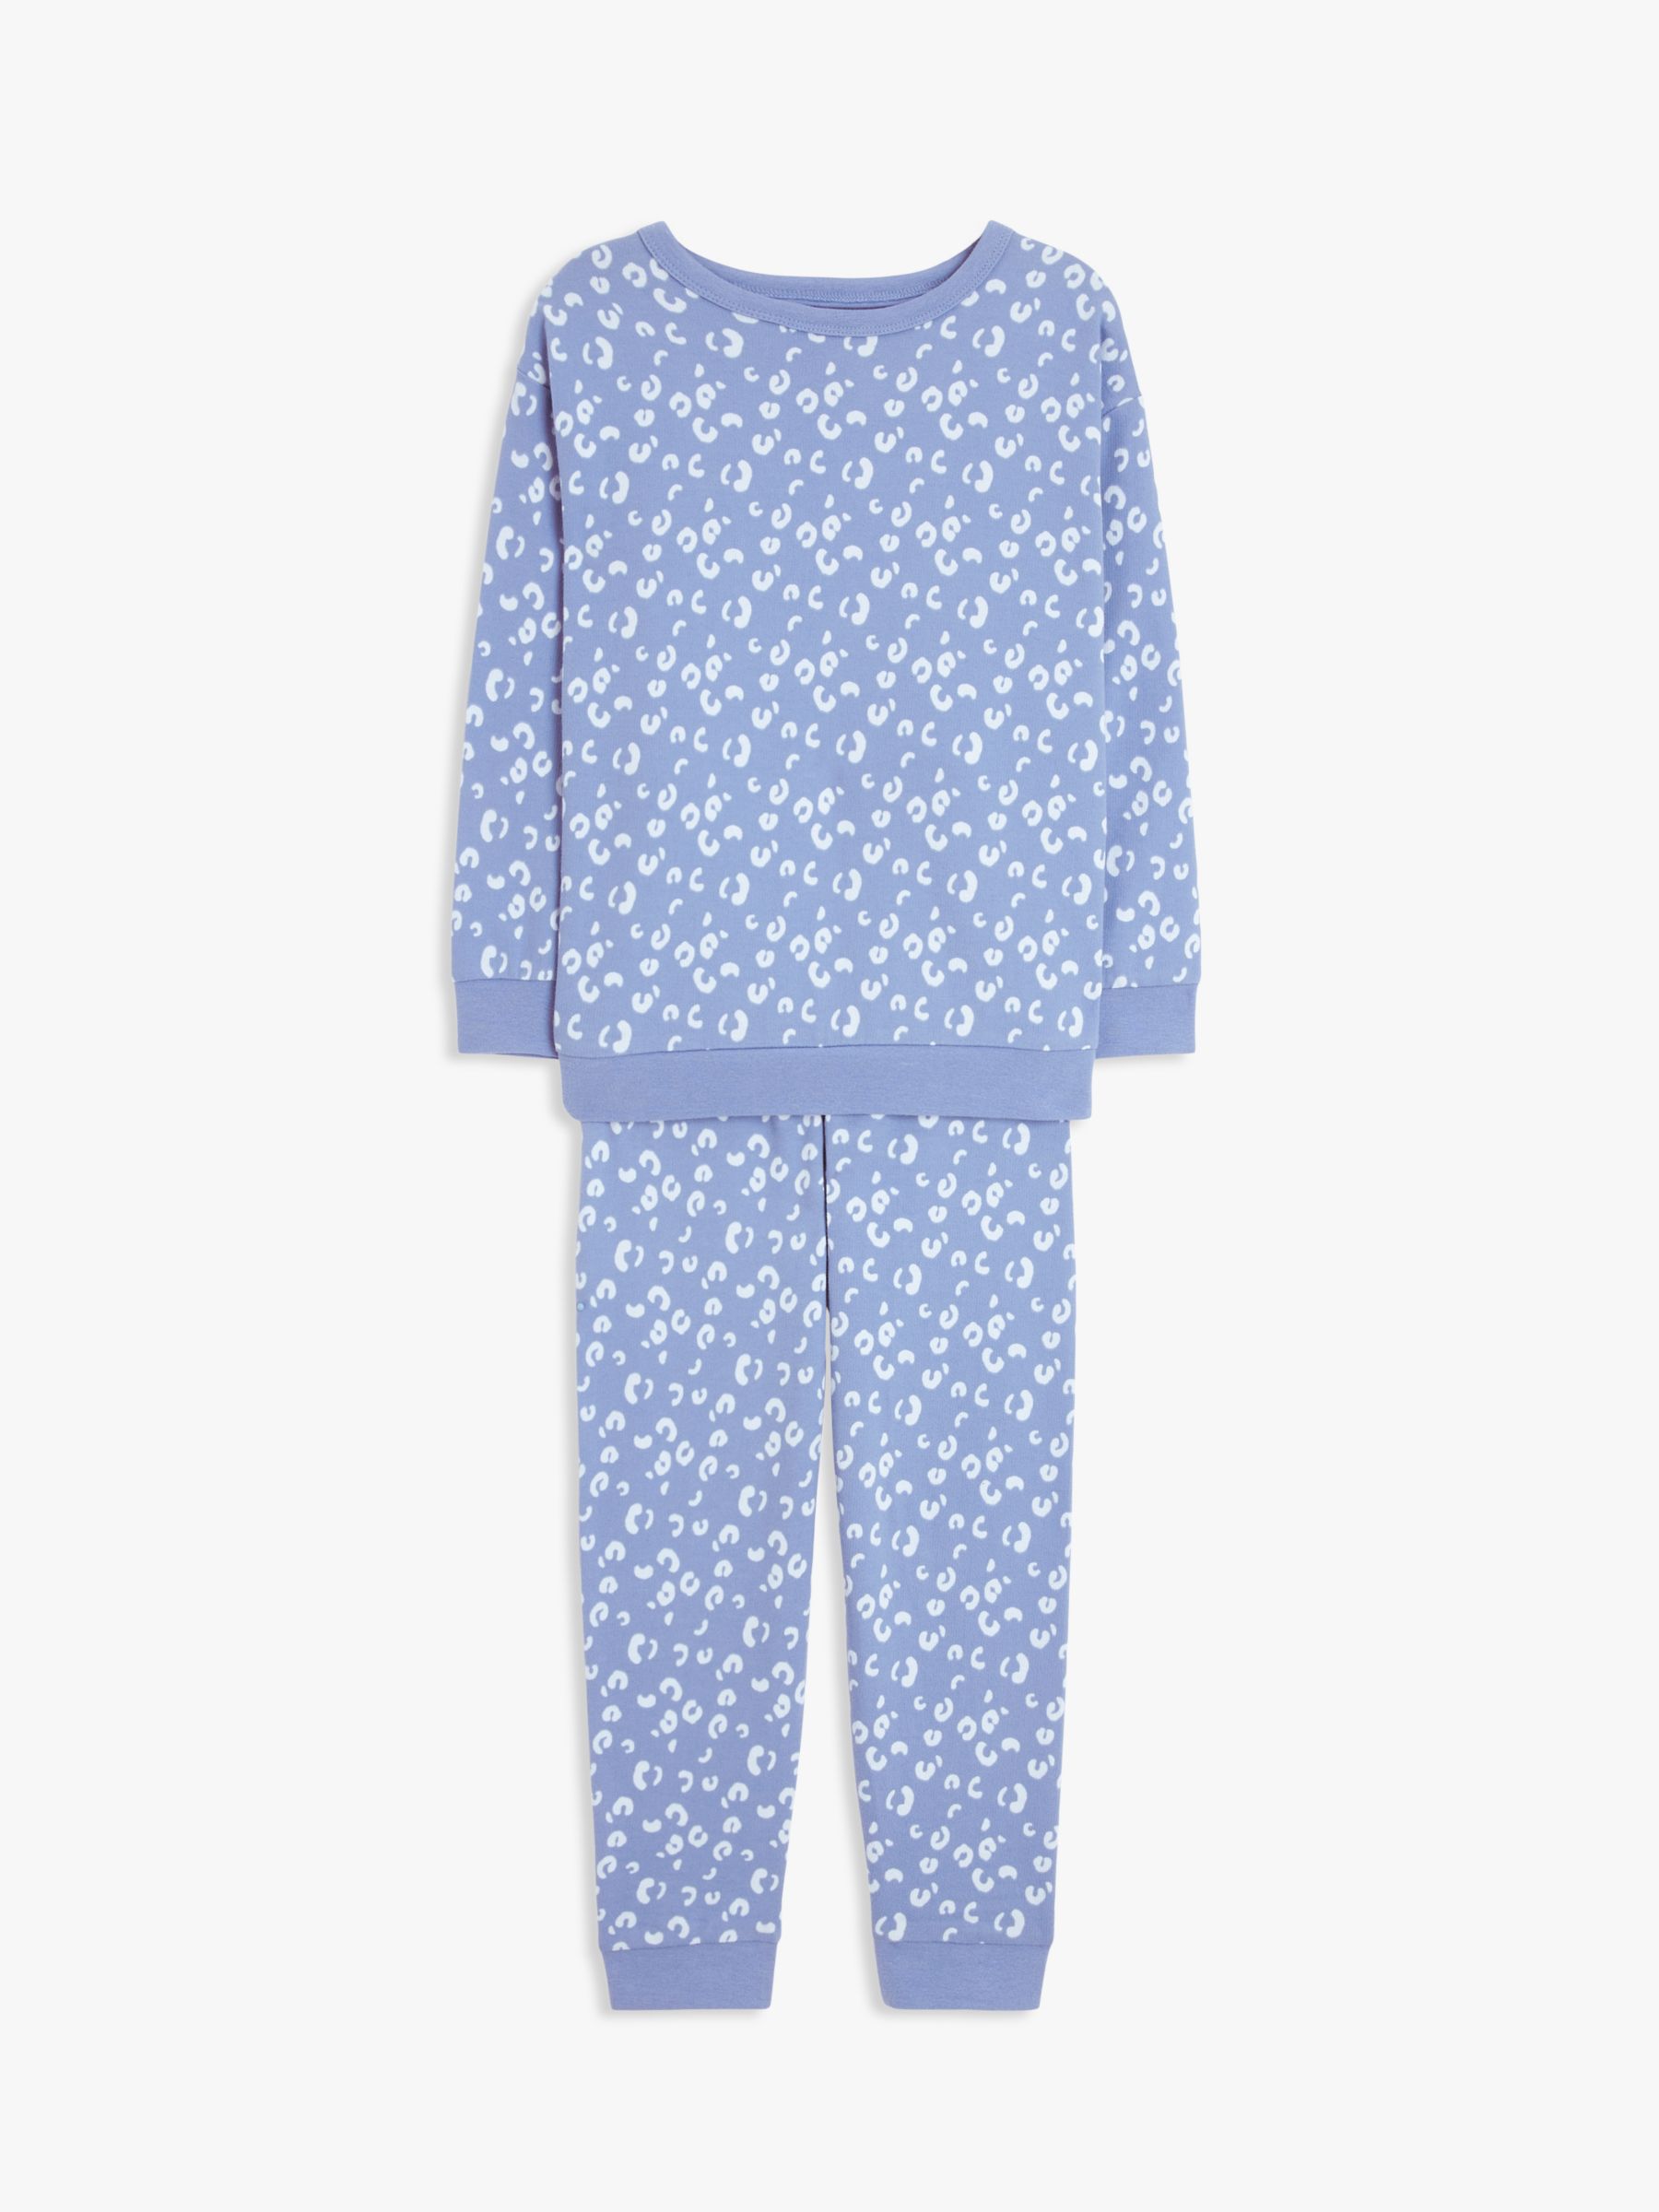 John Lewis Kids' Animal Print Pyjamas, Blue